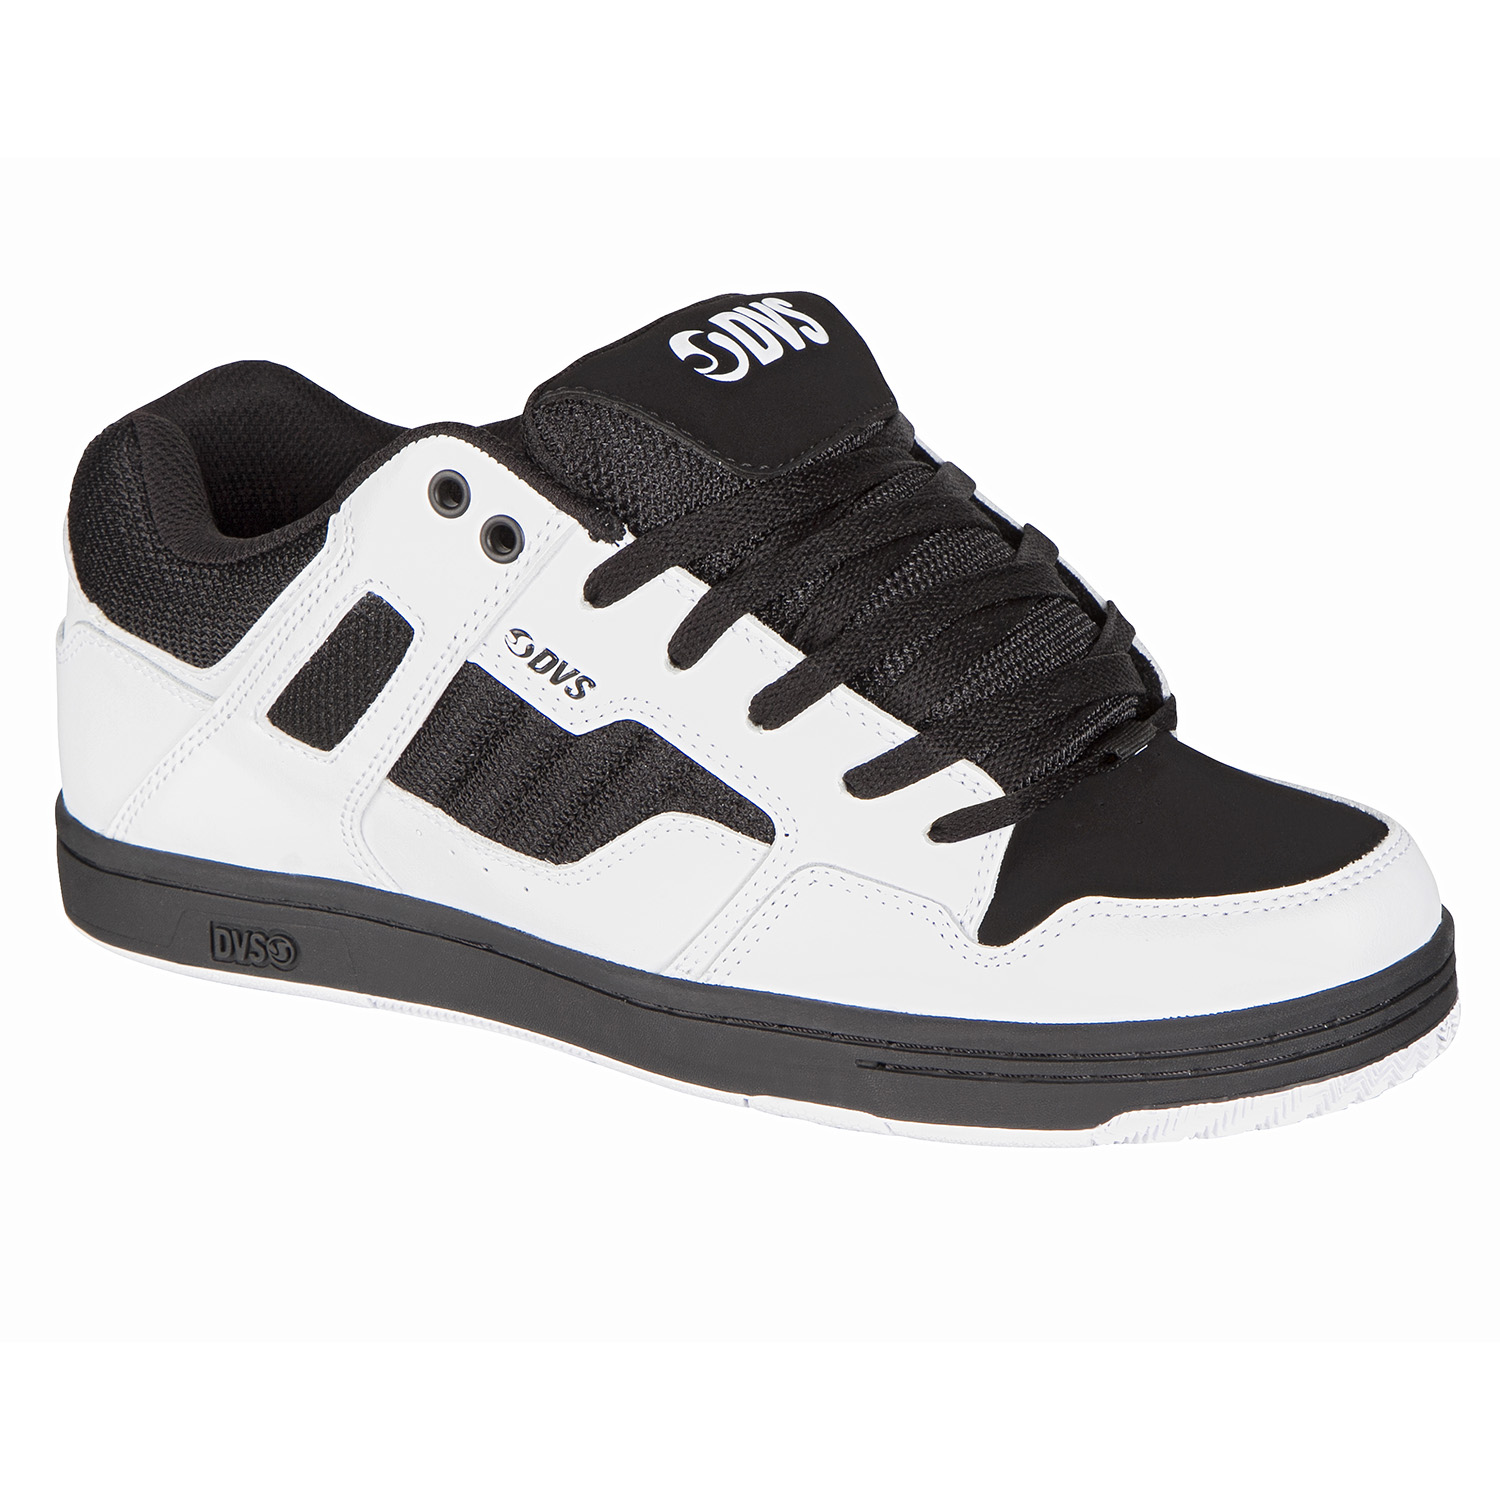 DVS Chaussures Enduro 125 White/Black Leather